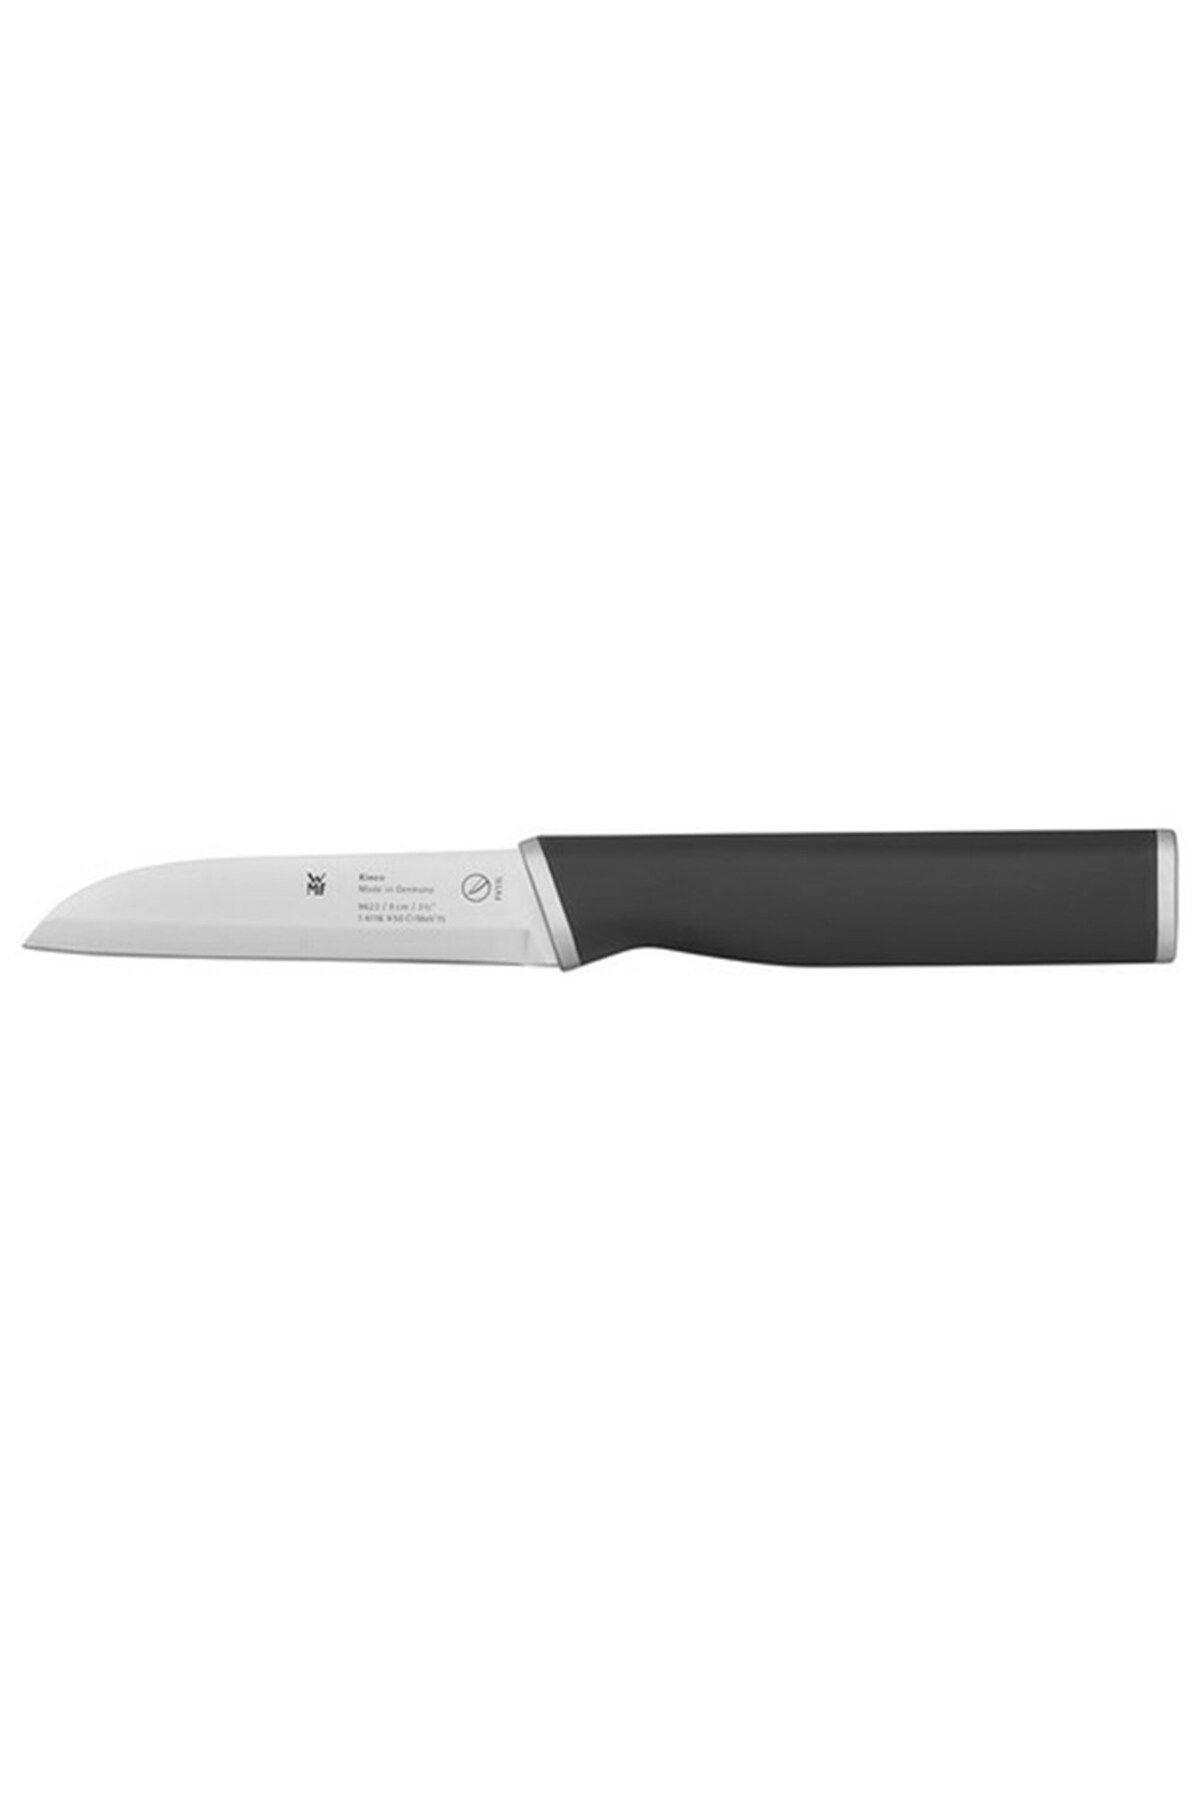 Wmf Kineo Sebze Bıçağı 9 Cm